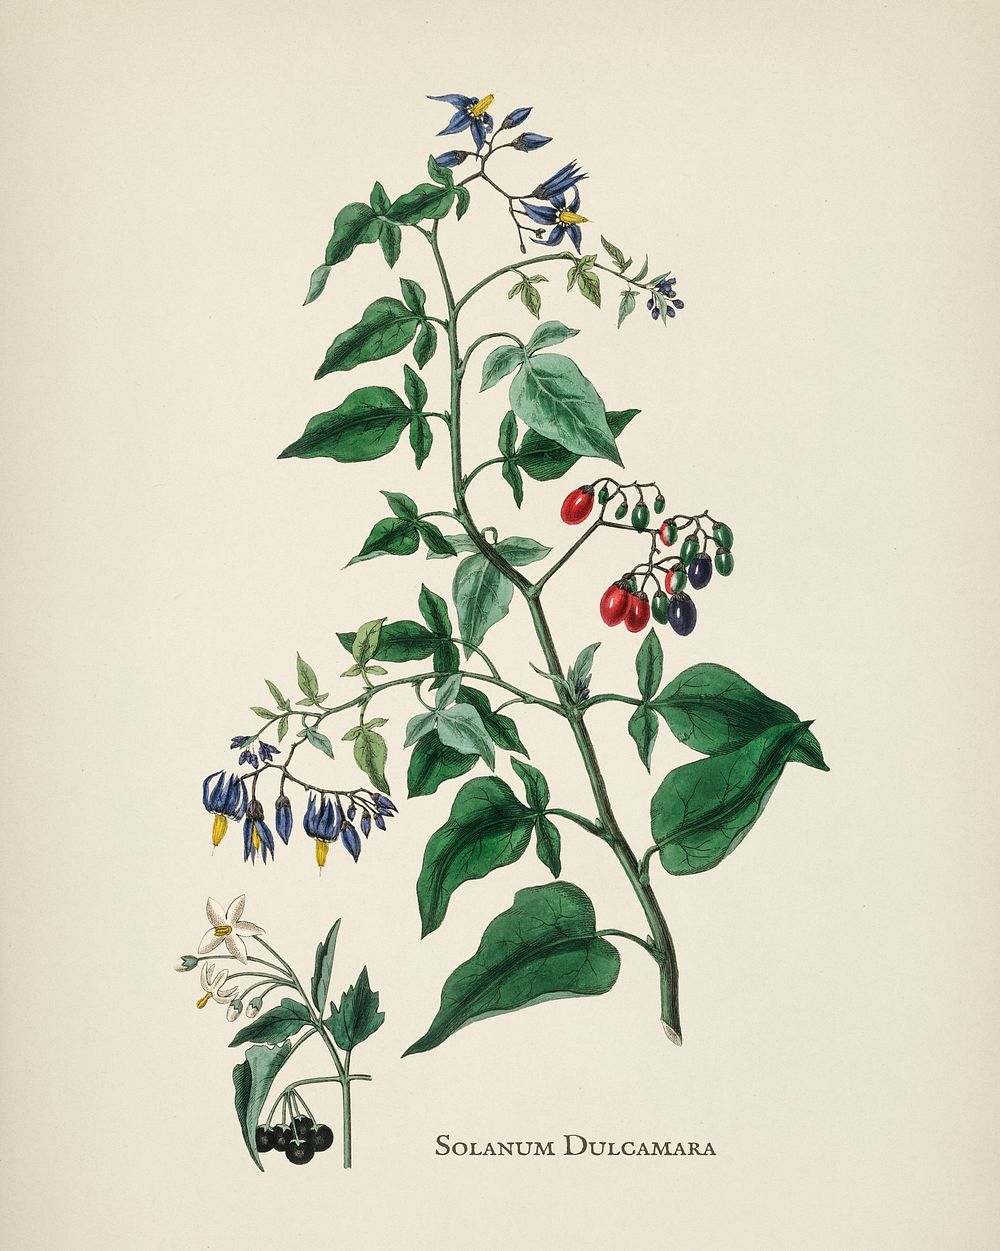 Bittersweet (Solanum dulcamara) illustration from Medical Botany (1836) by John Stephenson and James Morss Churchill.